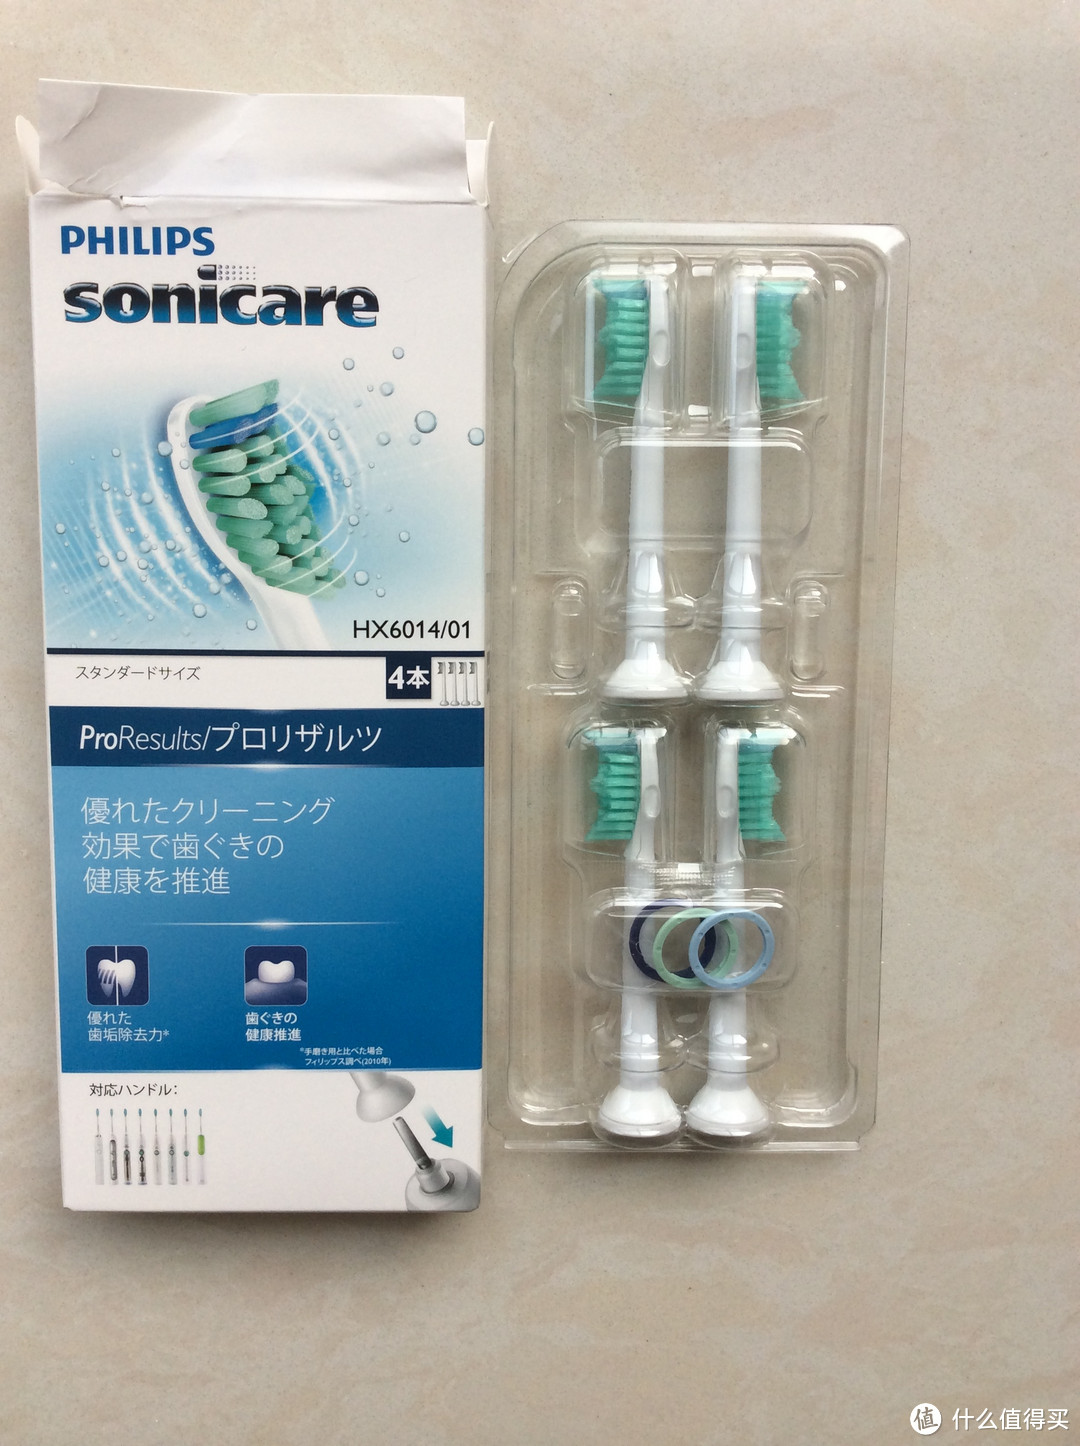 Philips 飞利浦 Sonicare HX6531/10 电动牙刷